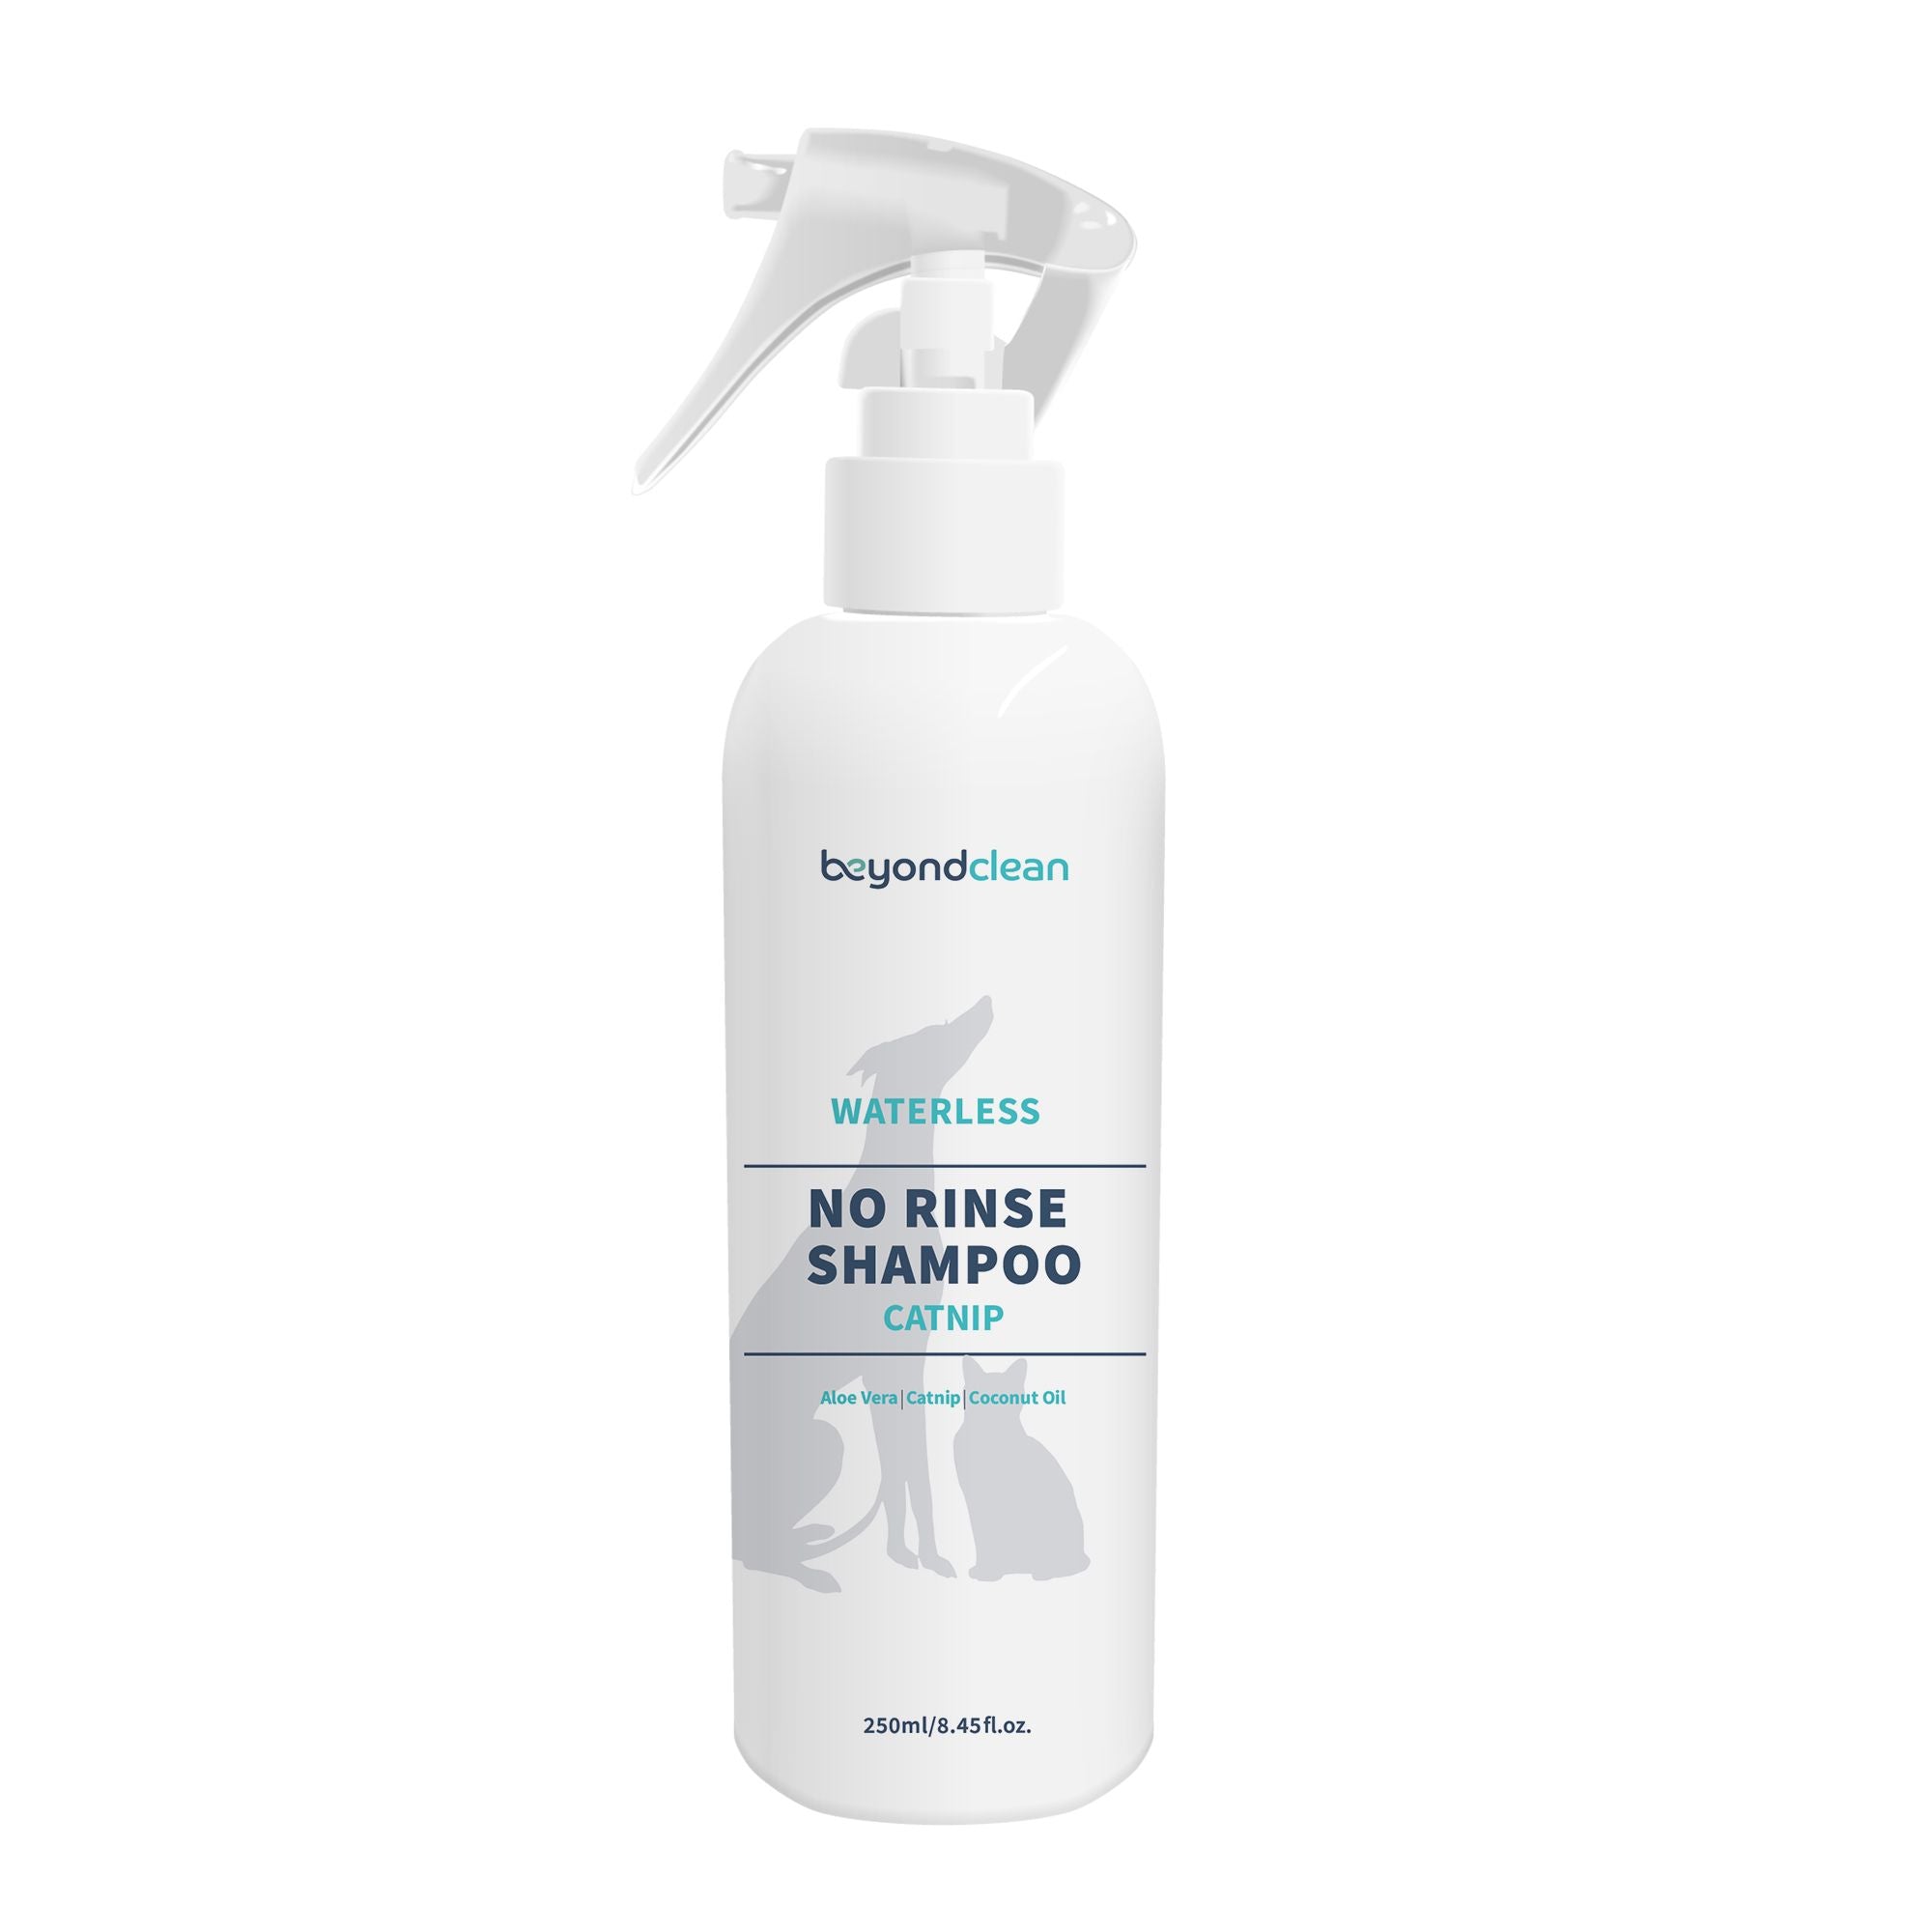 Beyond Clean - Waterless Shampoo Catnip (Spray)